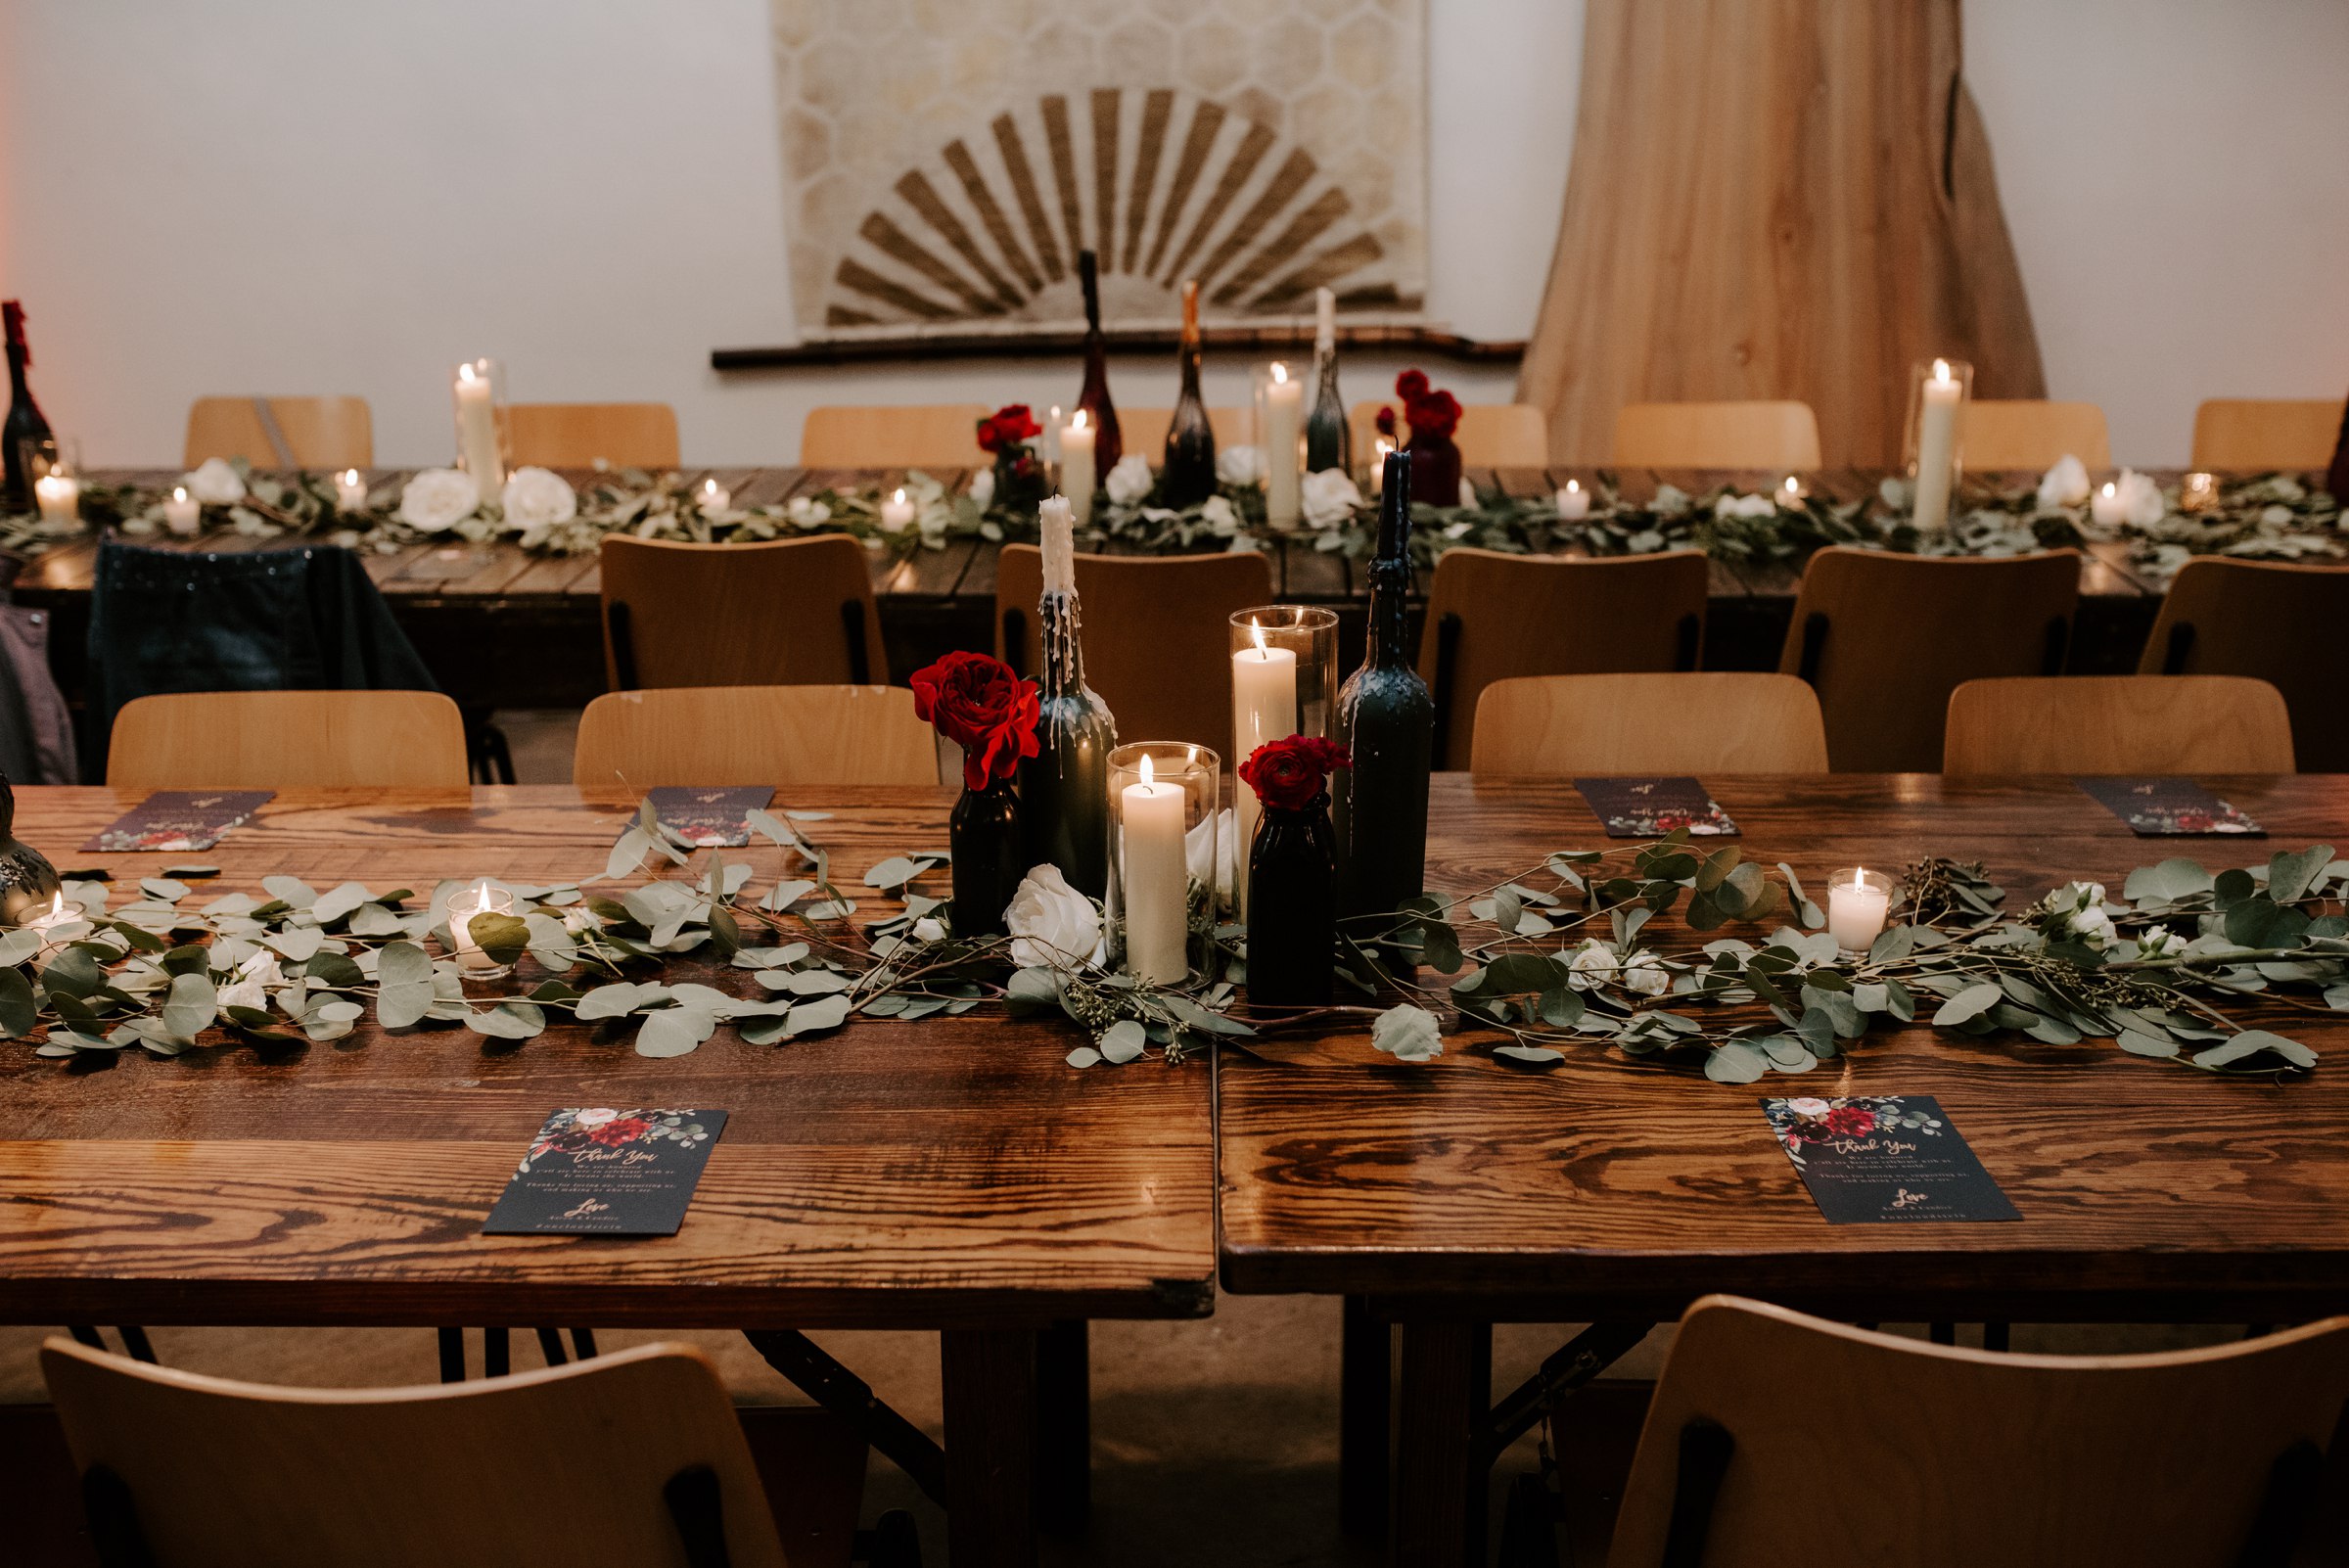  wedding venue table details vuka collective austin texas 